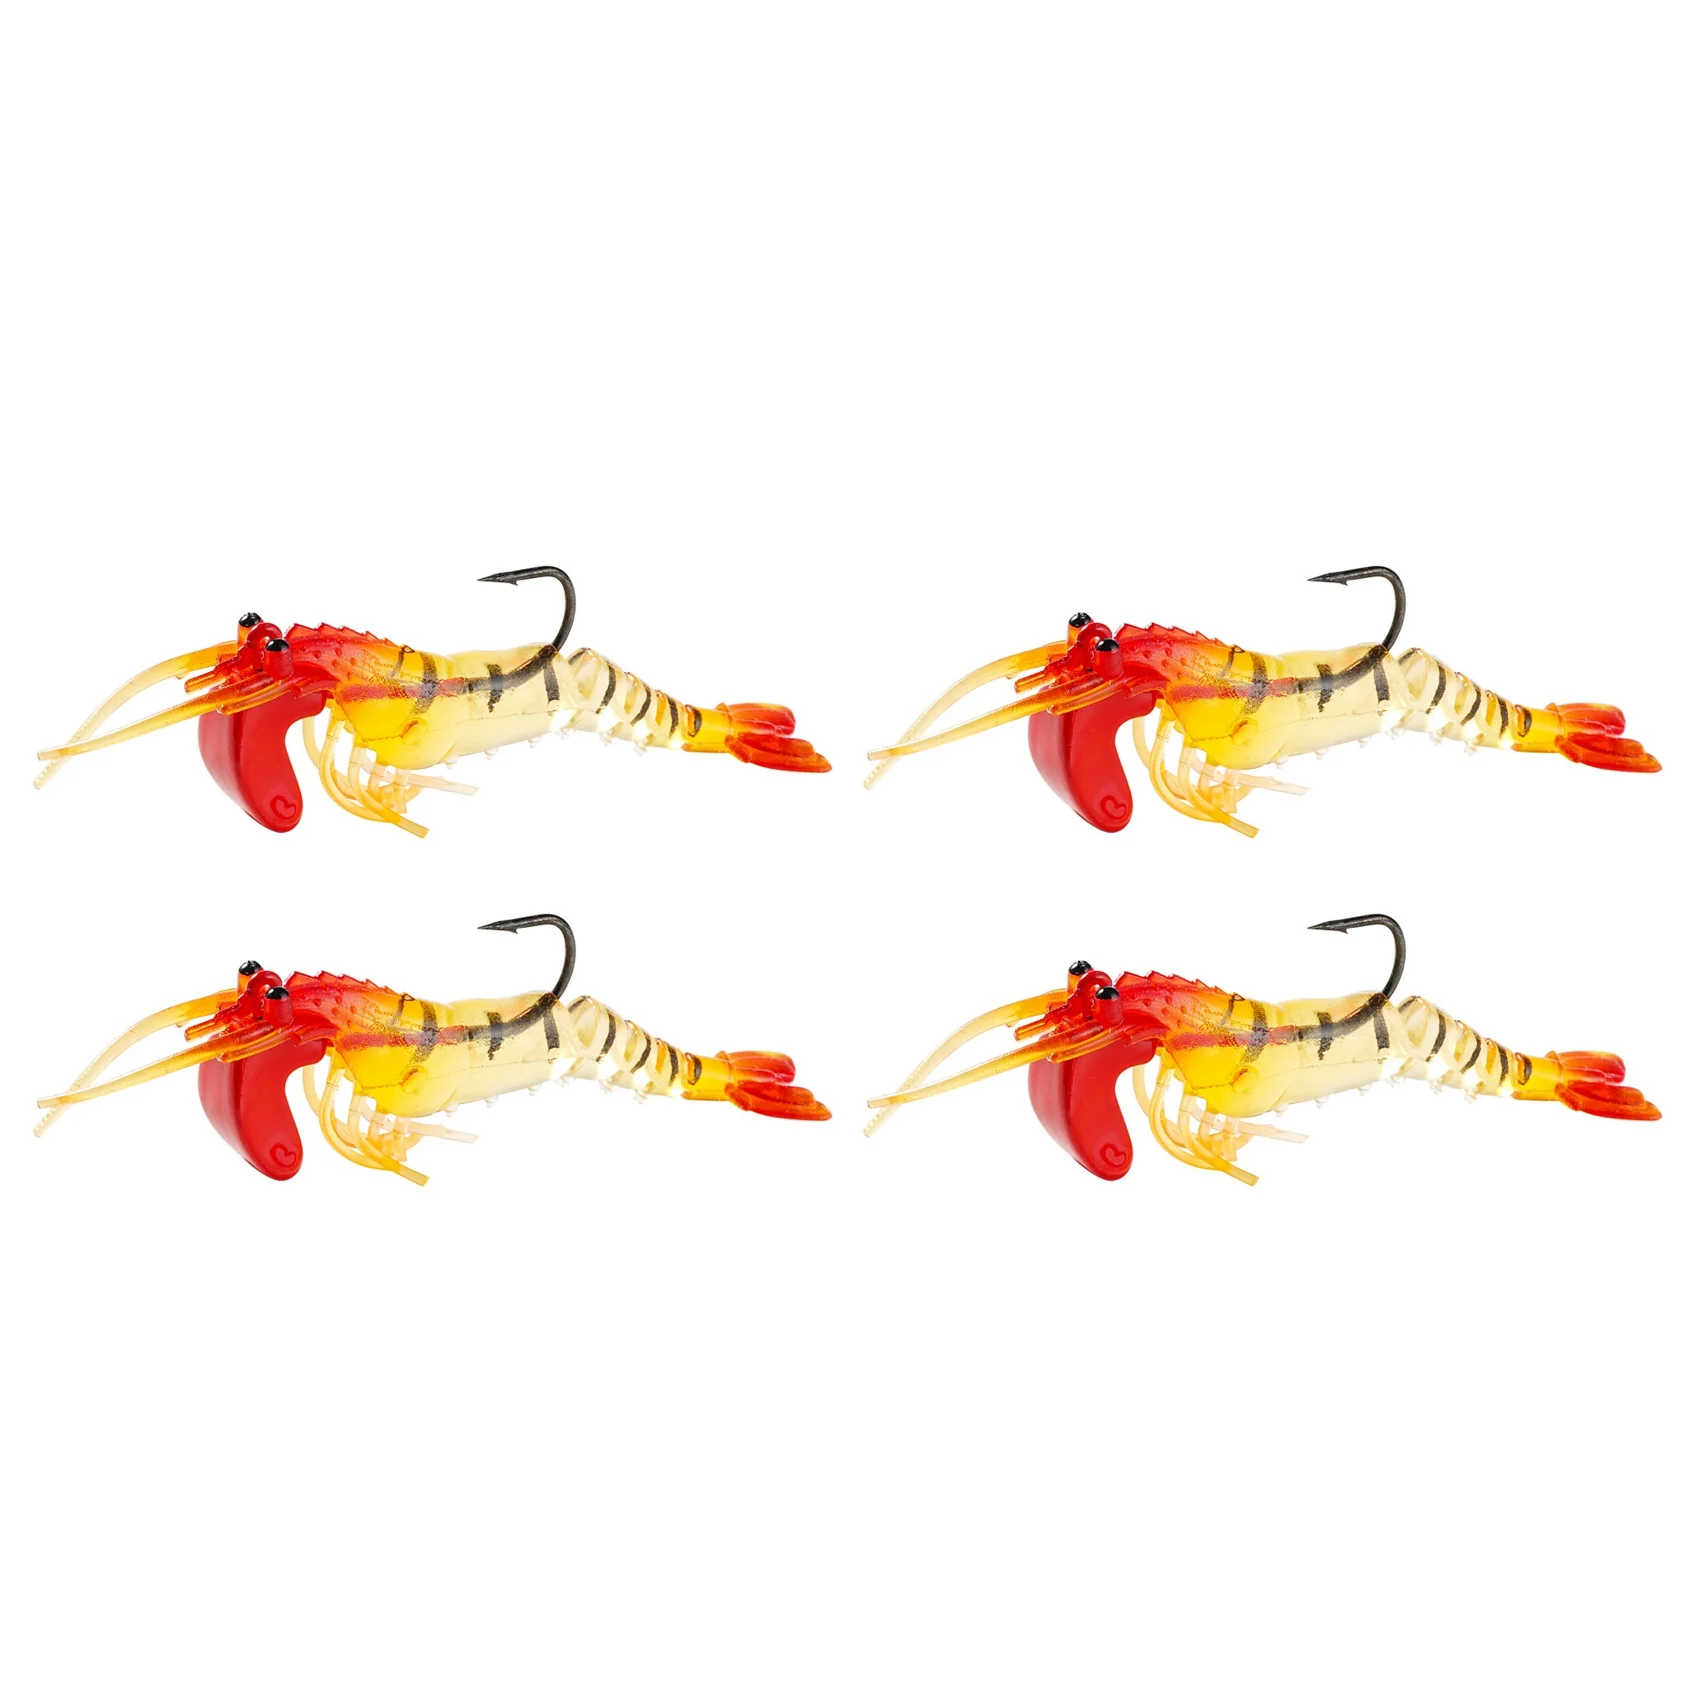 

Fake Fishing Bait Sea Fishing Lure Bait Bionic Soft Bait with Hook 7cm/12.5G Simulation Shrimp-Shaped Bait-B